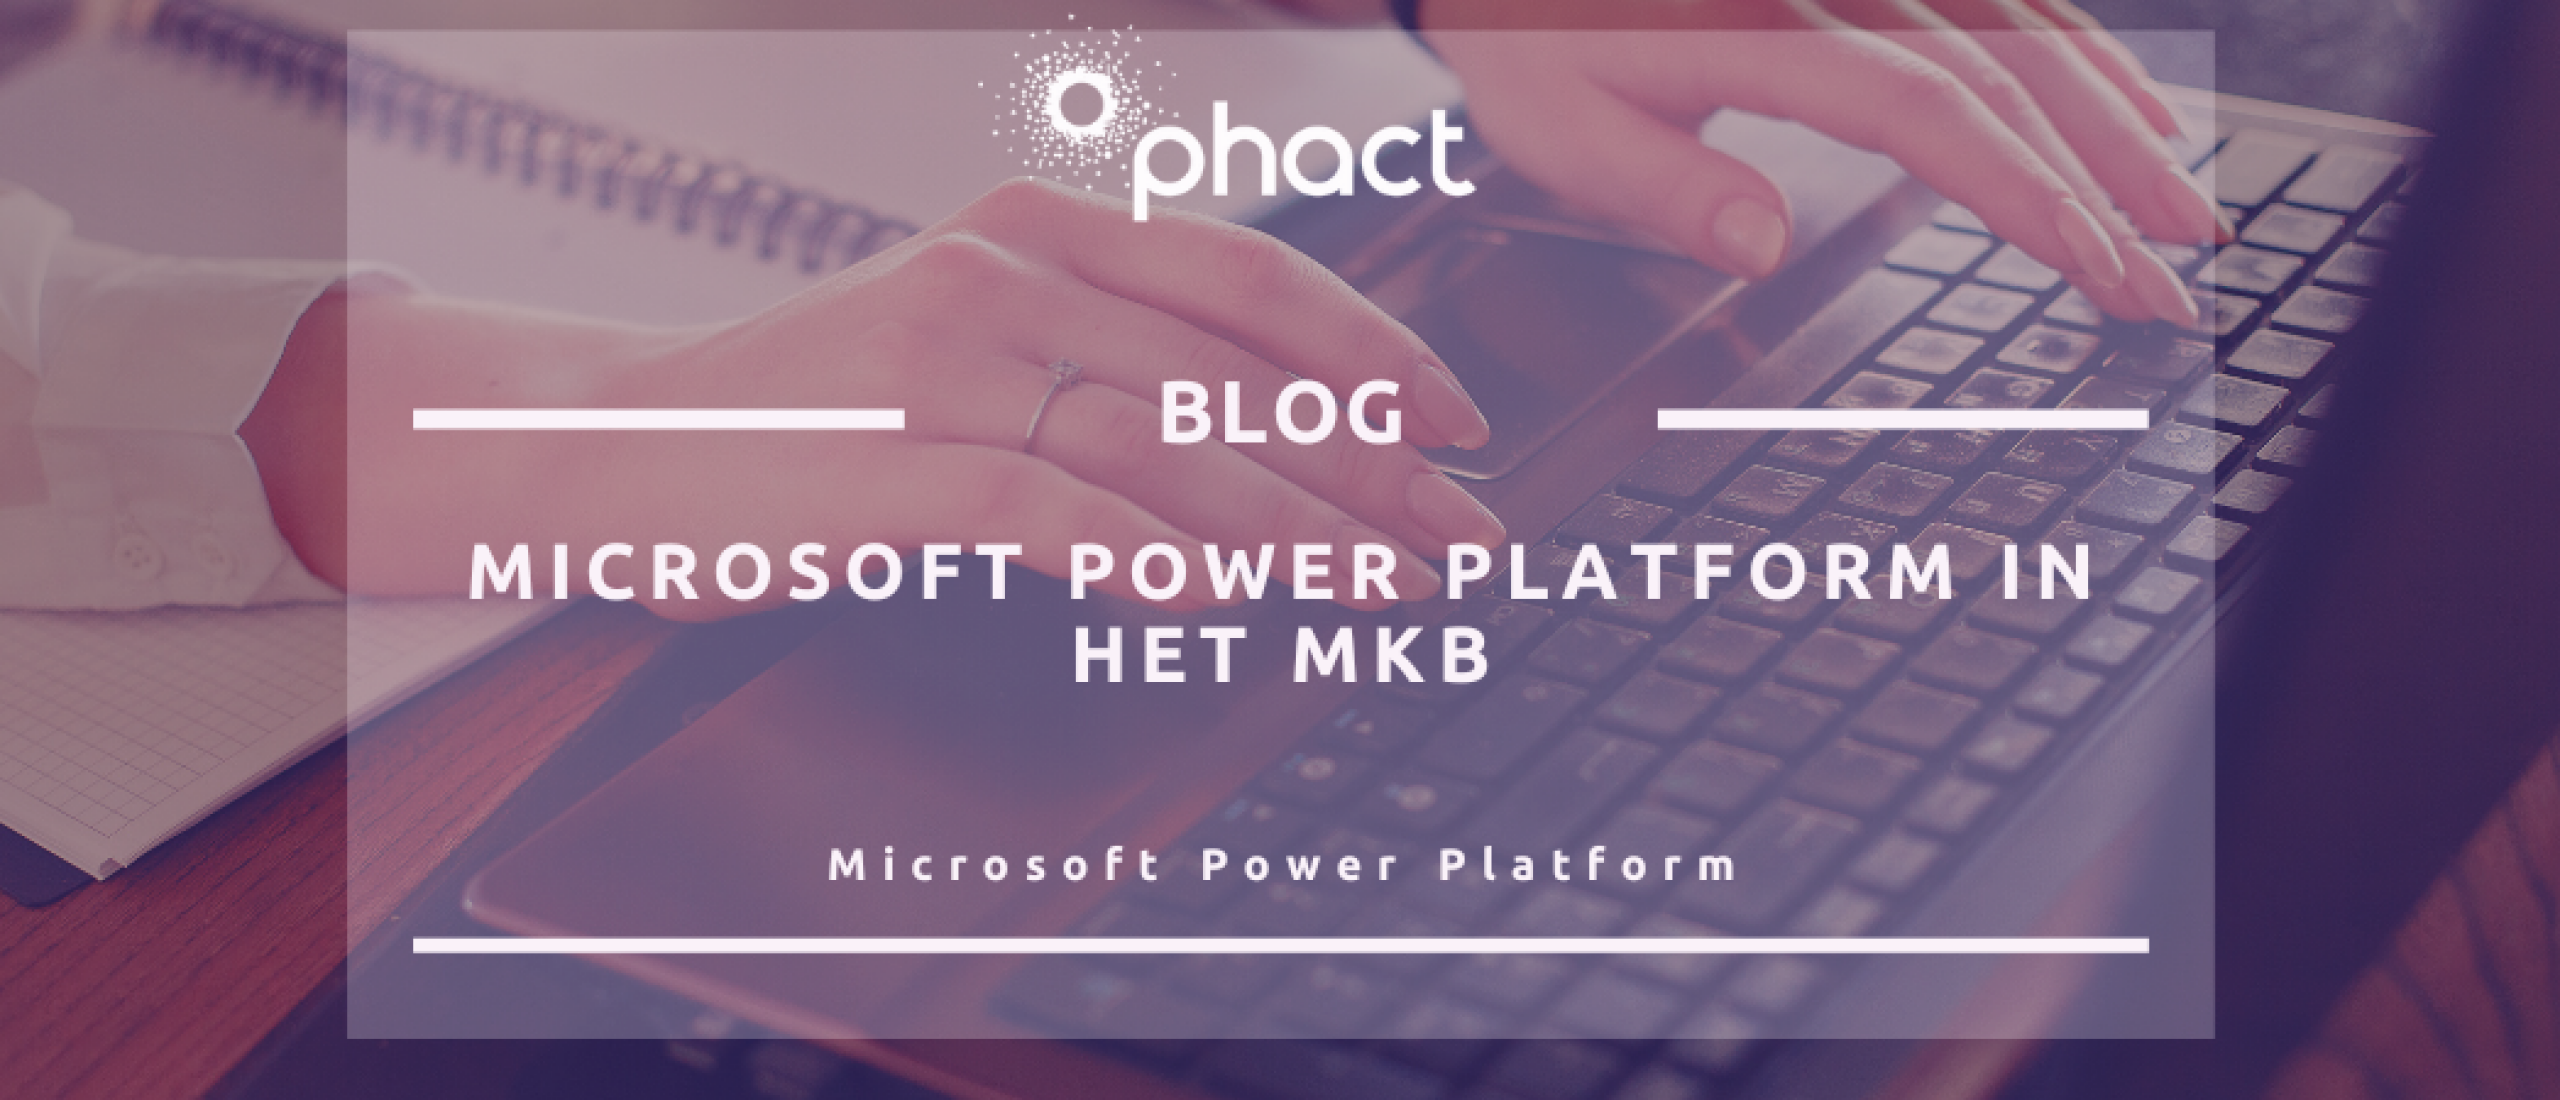 Microsoft Power Platform in het mkb